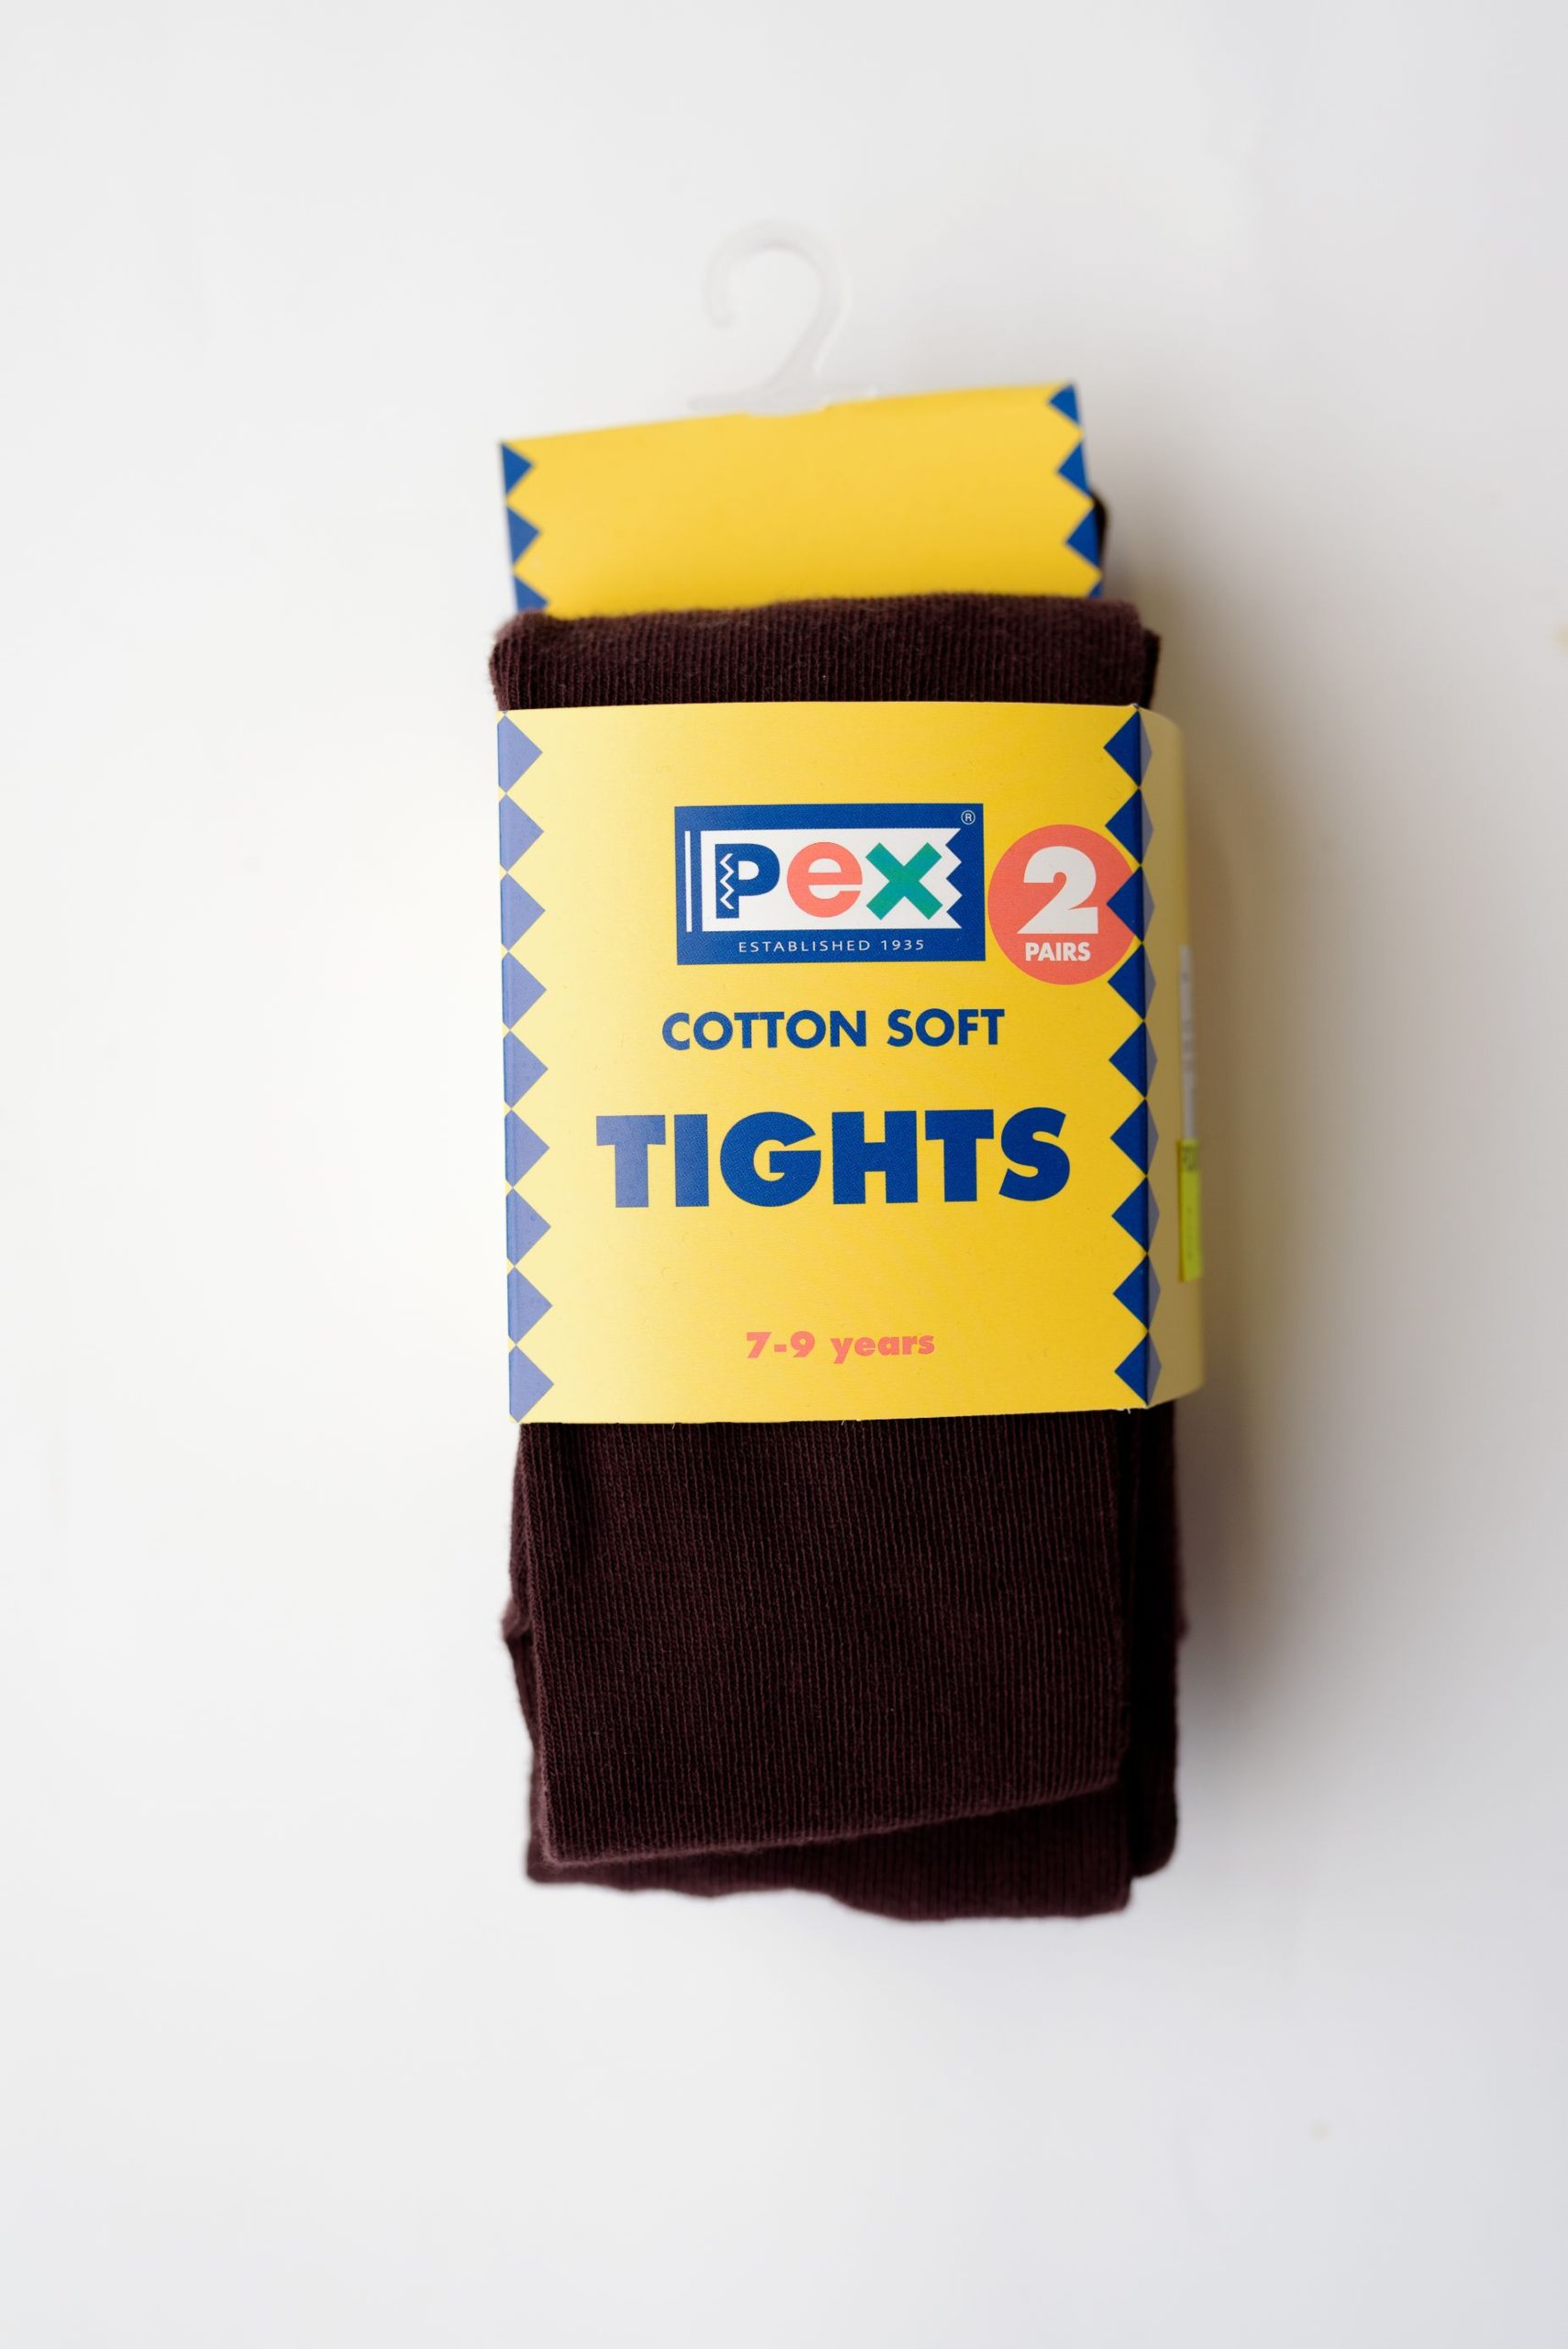 Pex cotton soft brown school tights